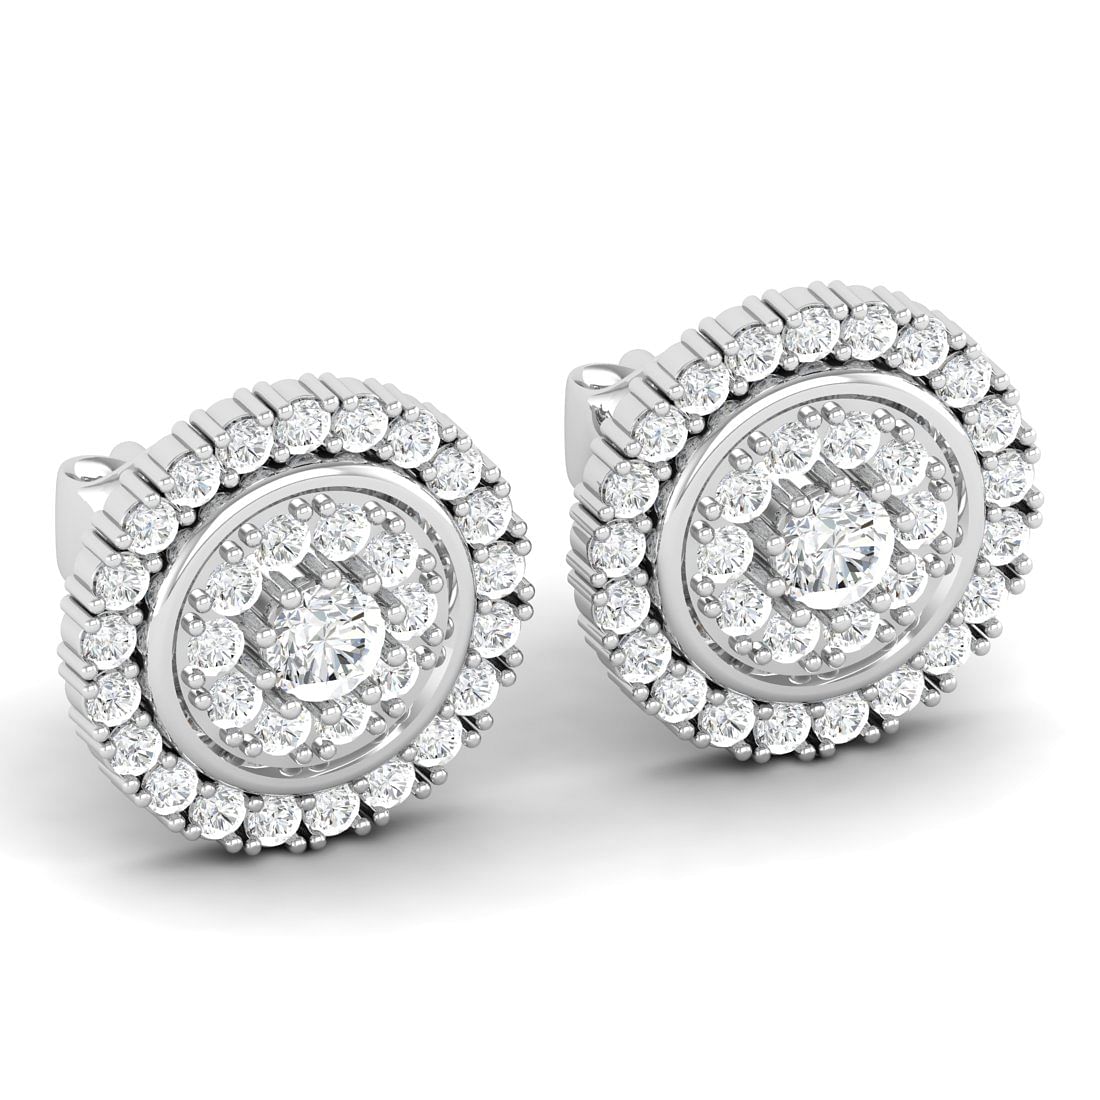 14k White Gold Adele Diamond Stud Earrings For Office Wear